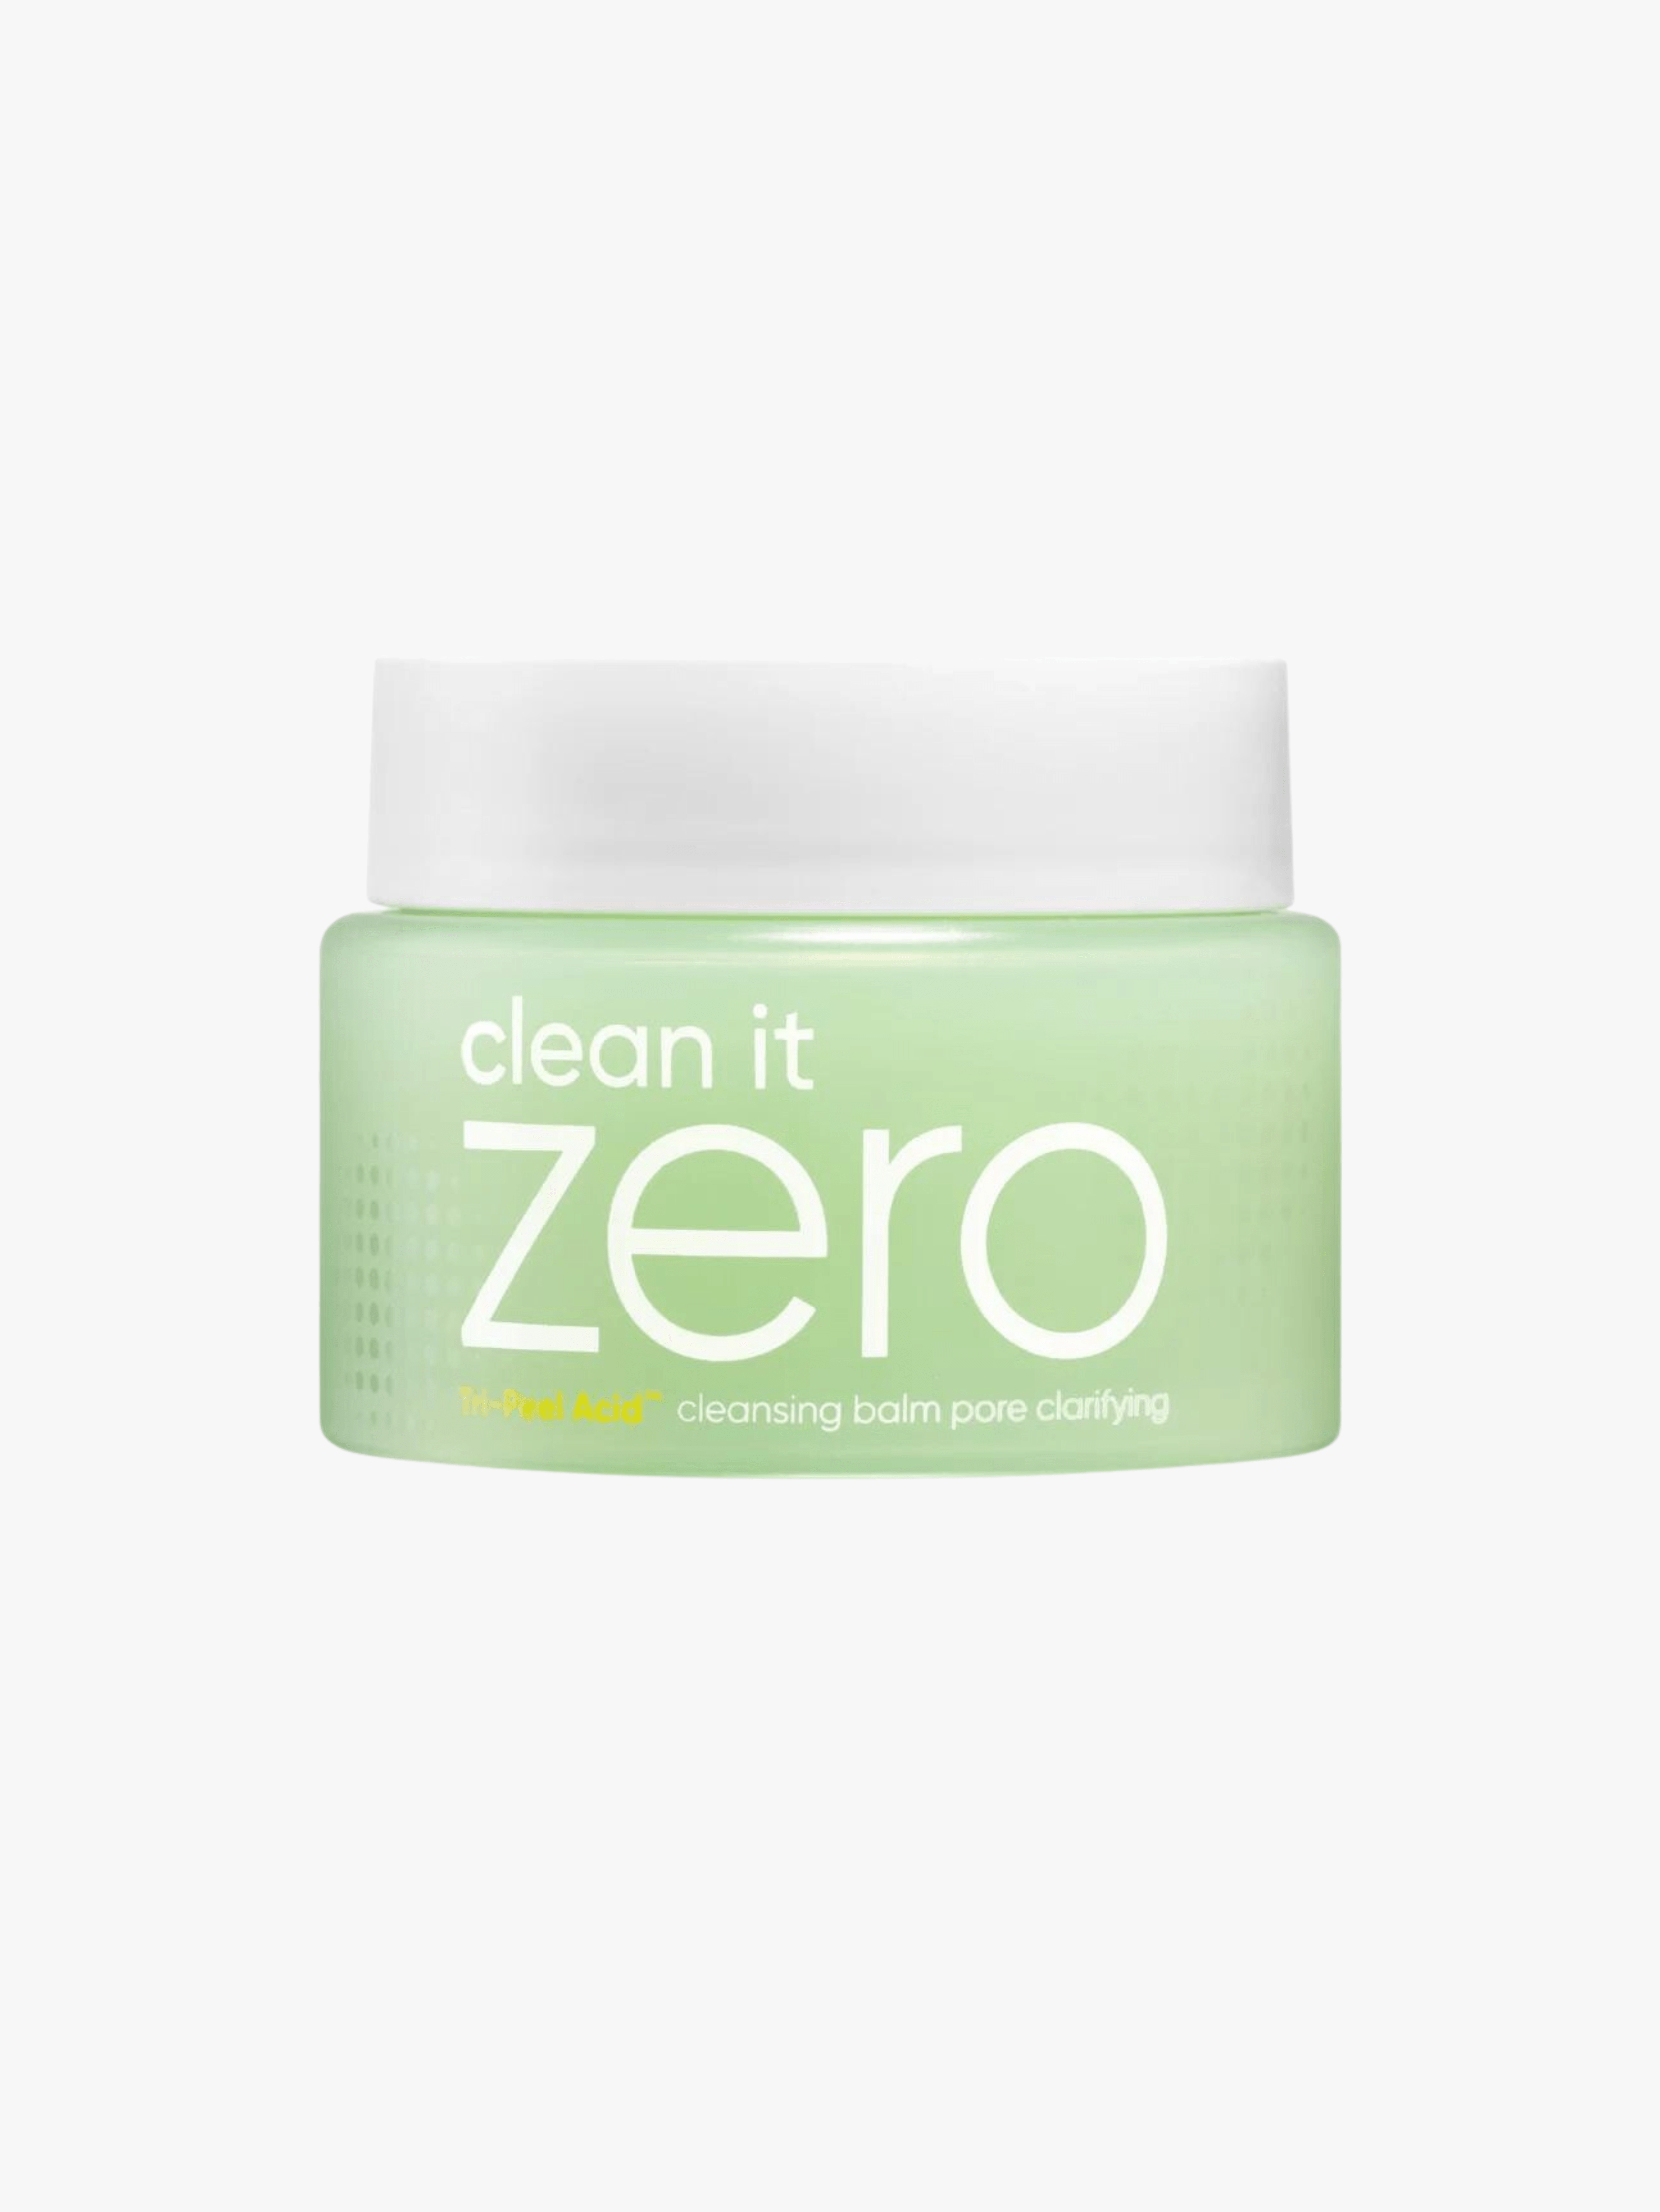 Banila Co - Cleansing balm - Clean it zero cleansing balm Pore Clarifying